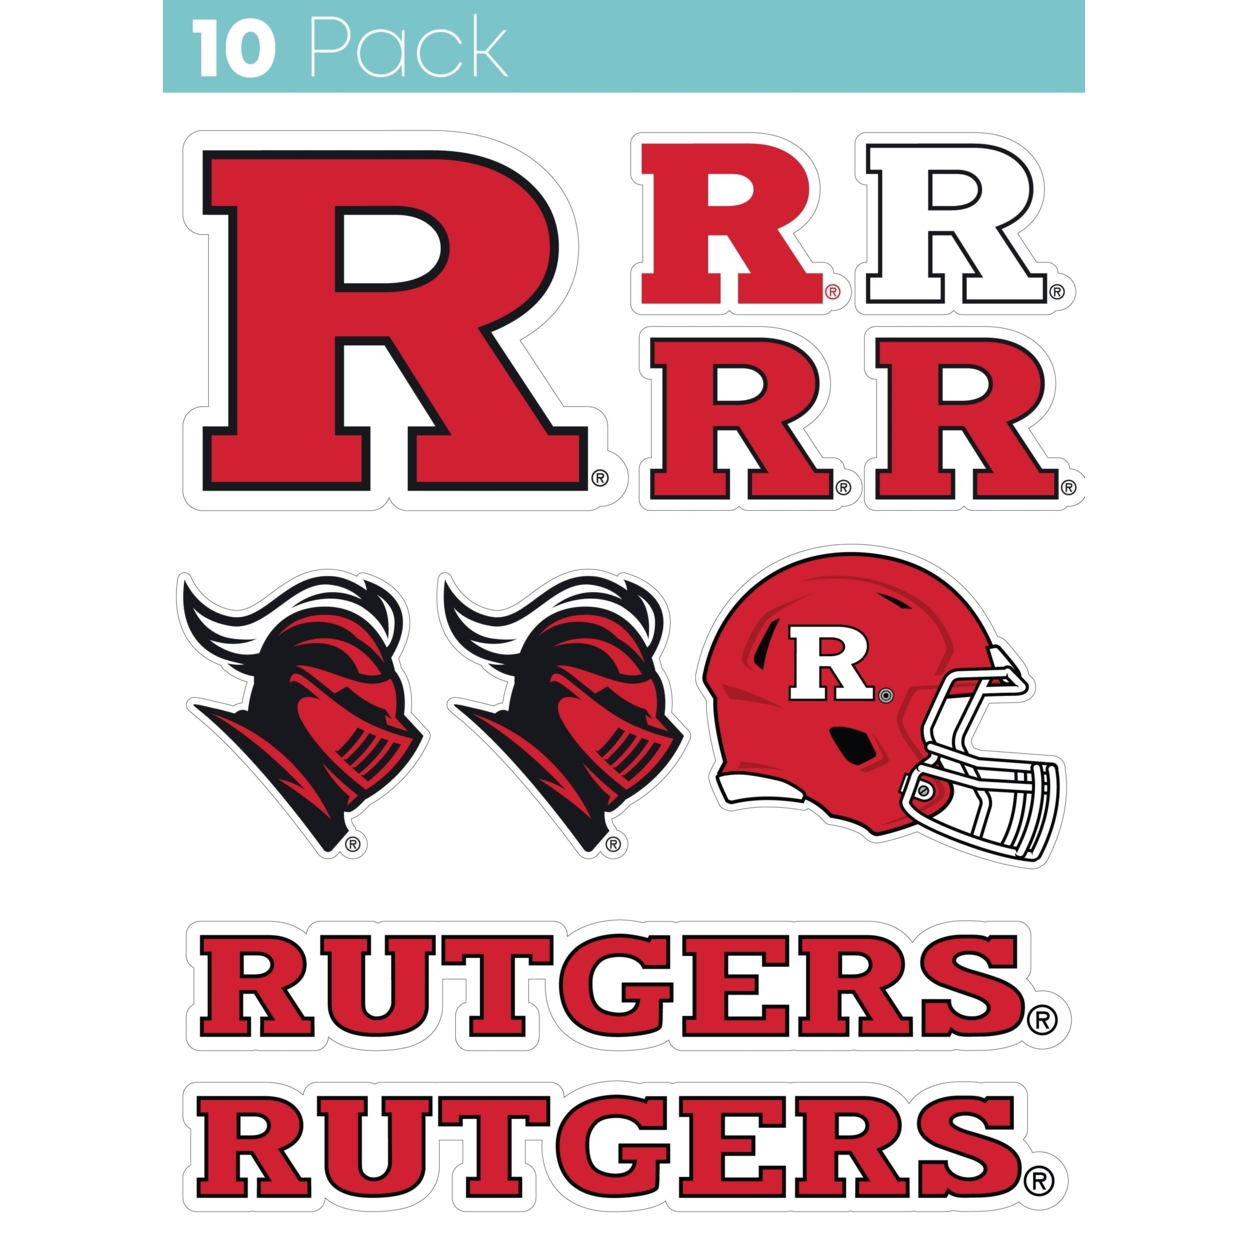 Rutgers Scarlet Knights 10 Pack Collegiate Vinyl Decal StickerÂ 